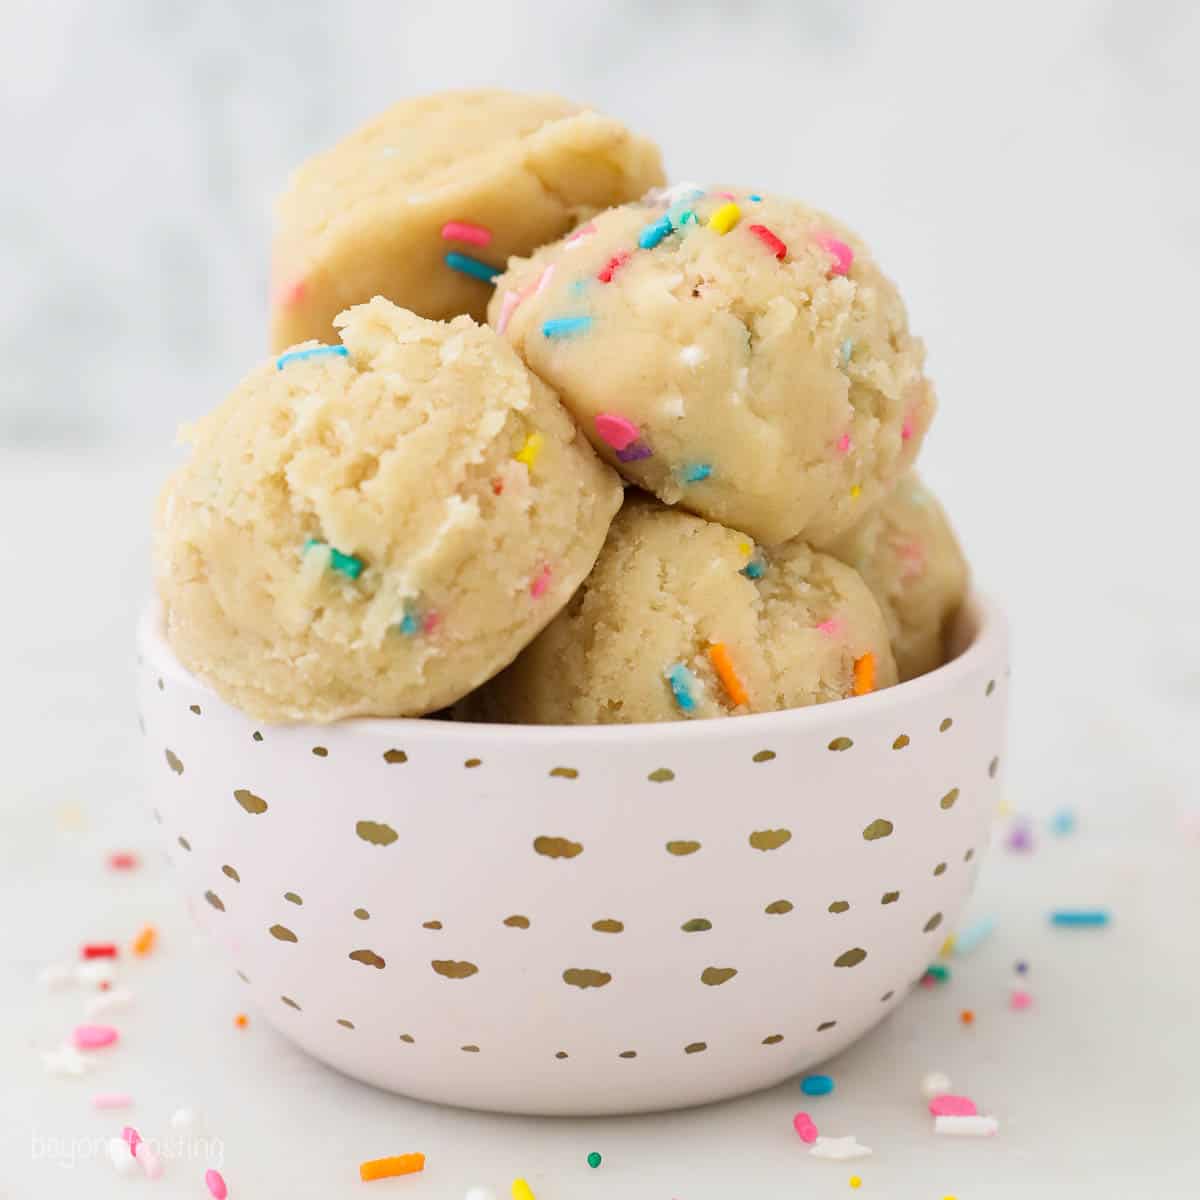 https://beyondfrosting.com/wp-content/uploads/2021/08/Edible-Sugar-Cookie-Dough-031-2.jpg